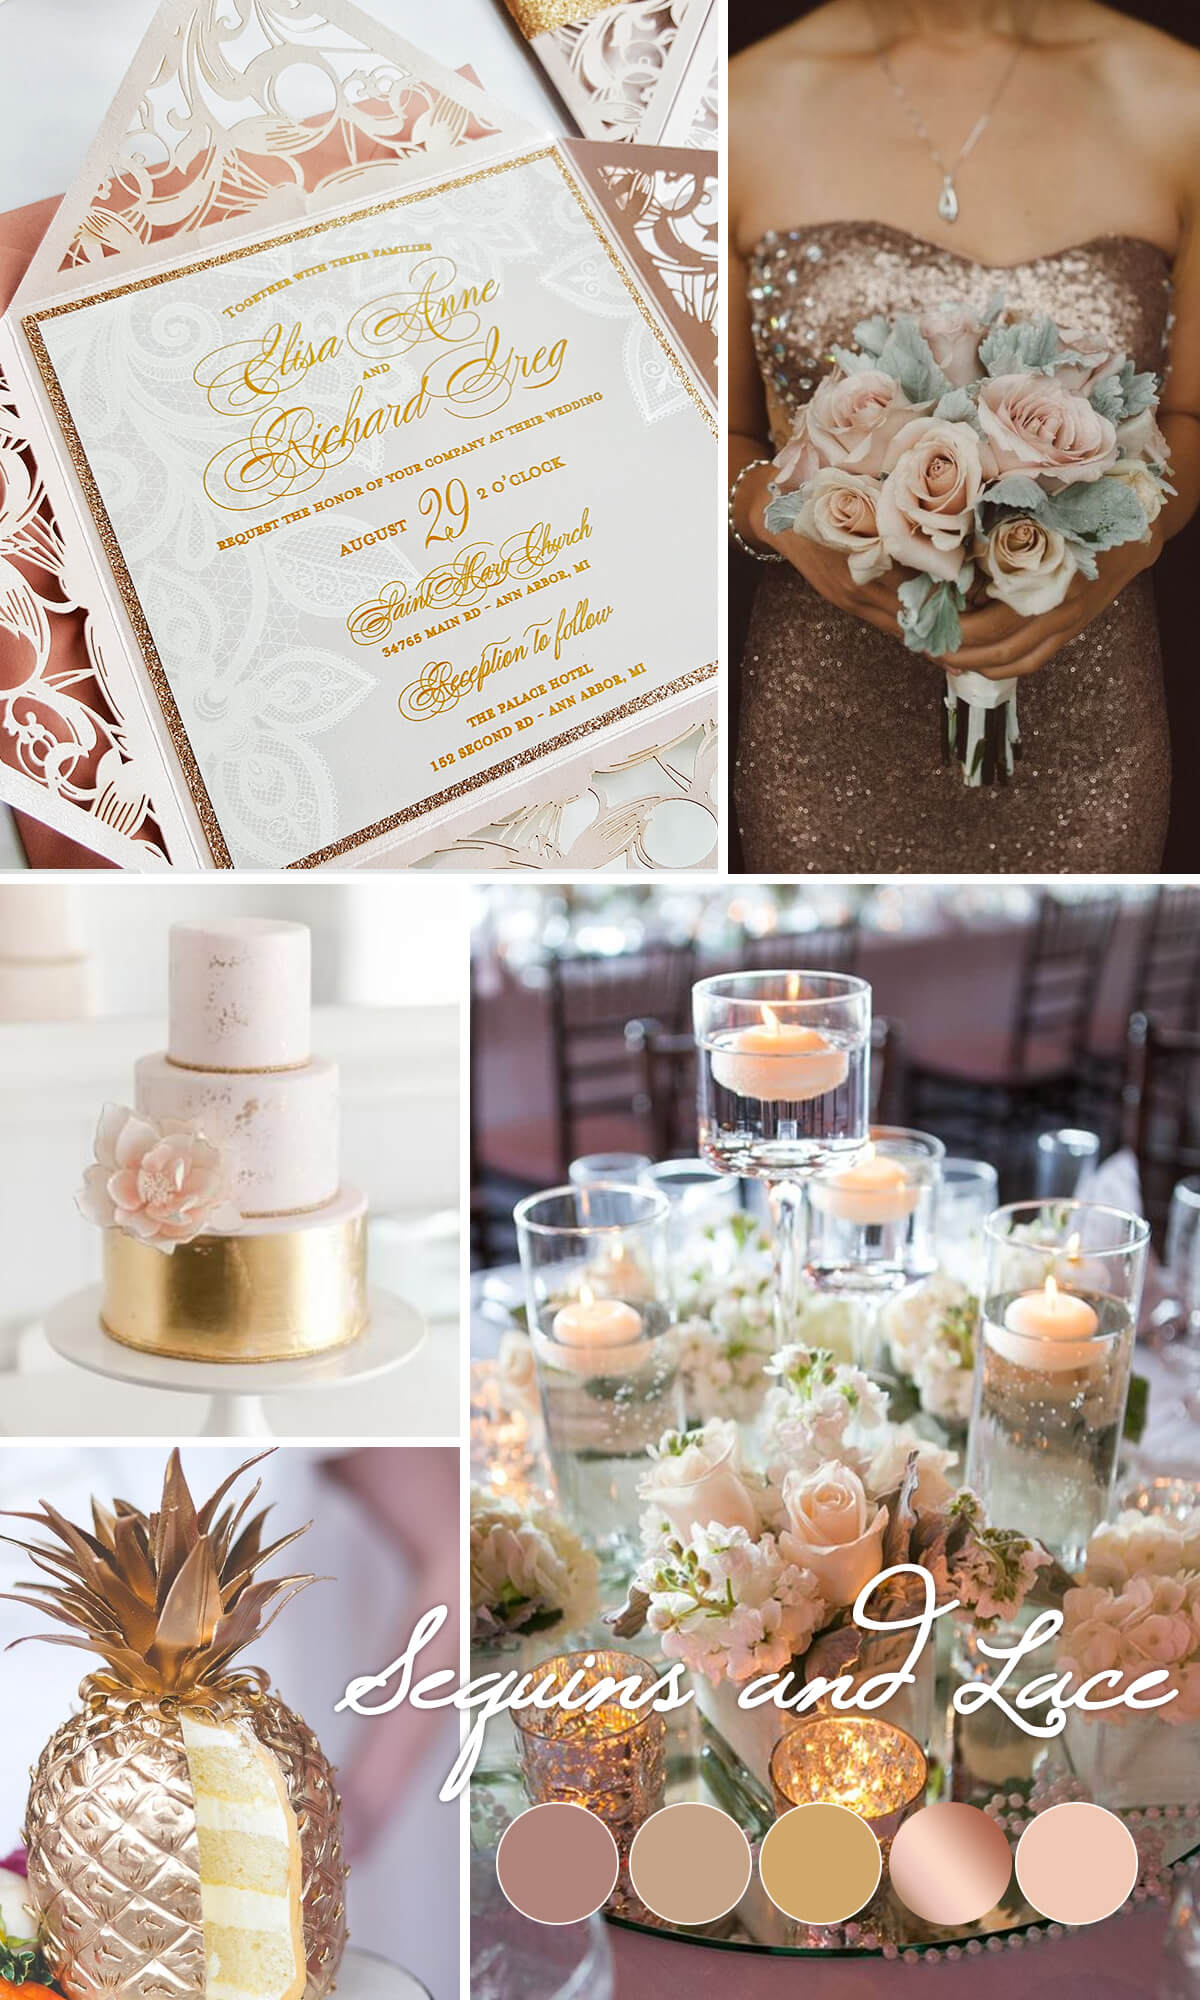 A wedding invitation, bouquet, cakes, and décor